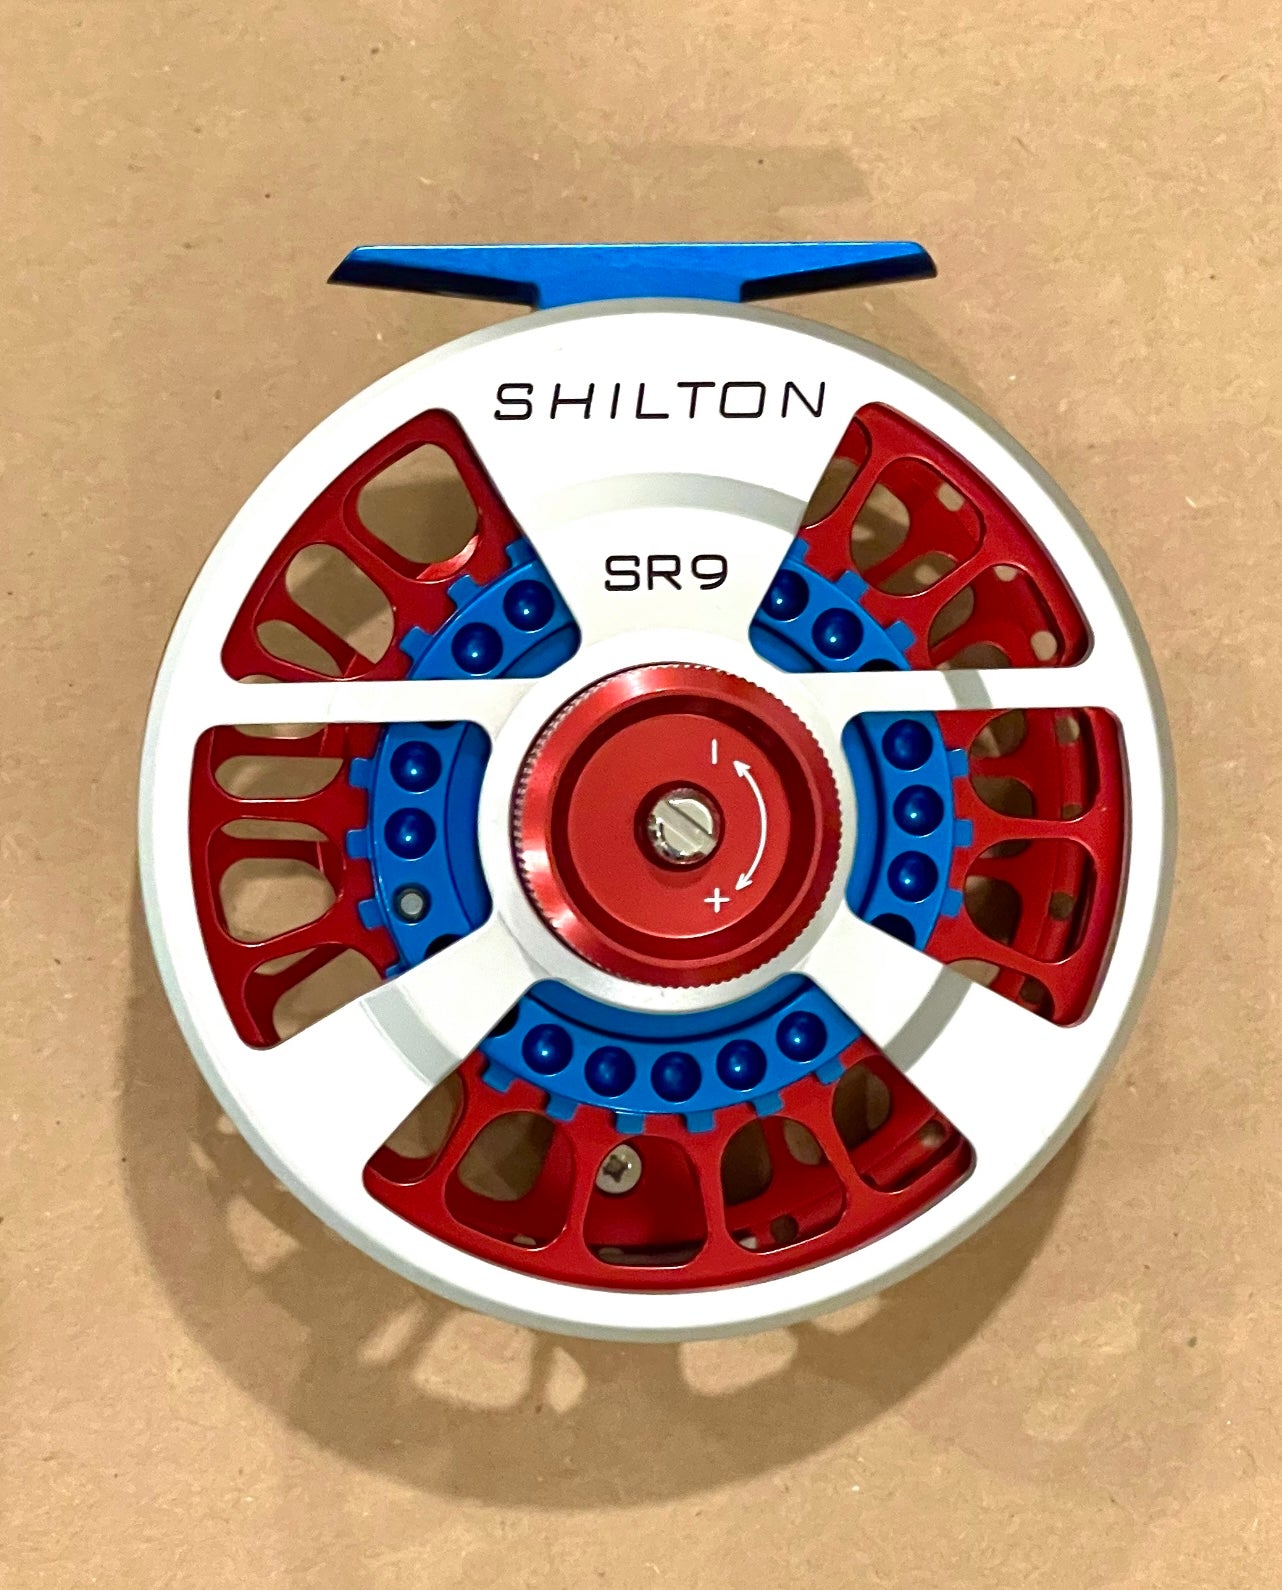 Shilton SR12 Reels (12wt+) in Red White & Blue - NEW!